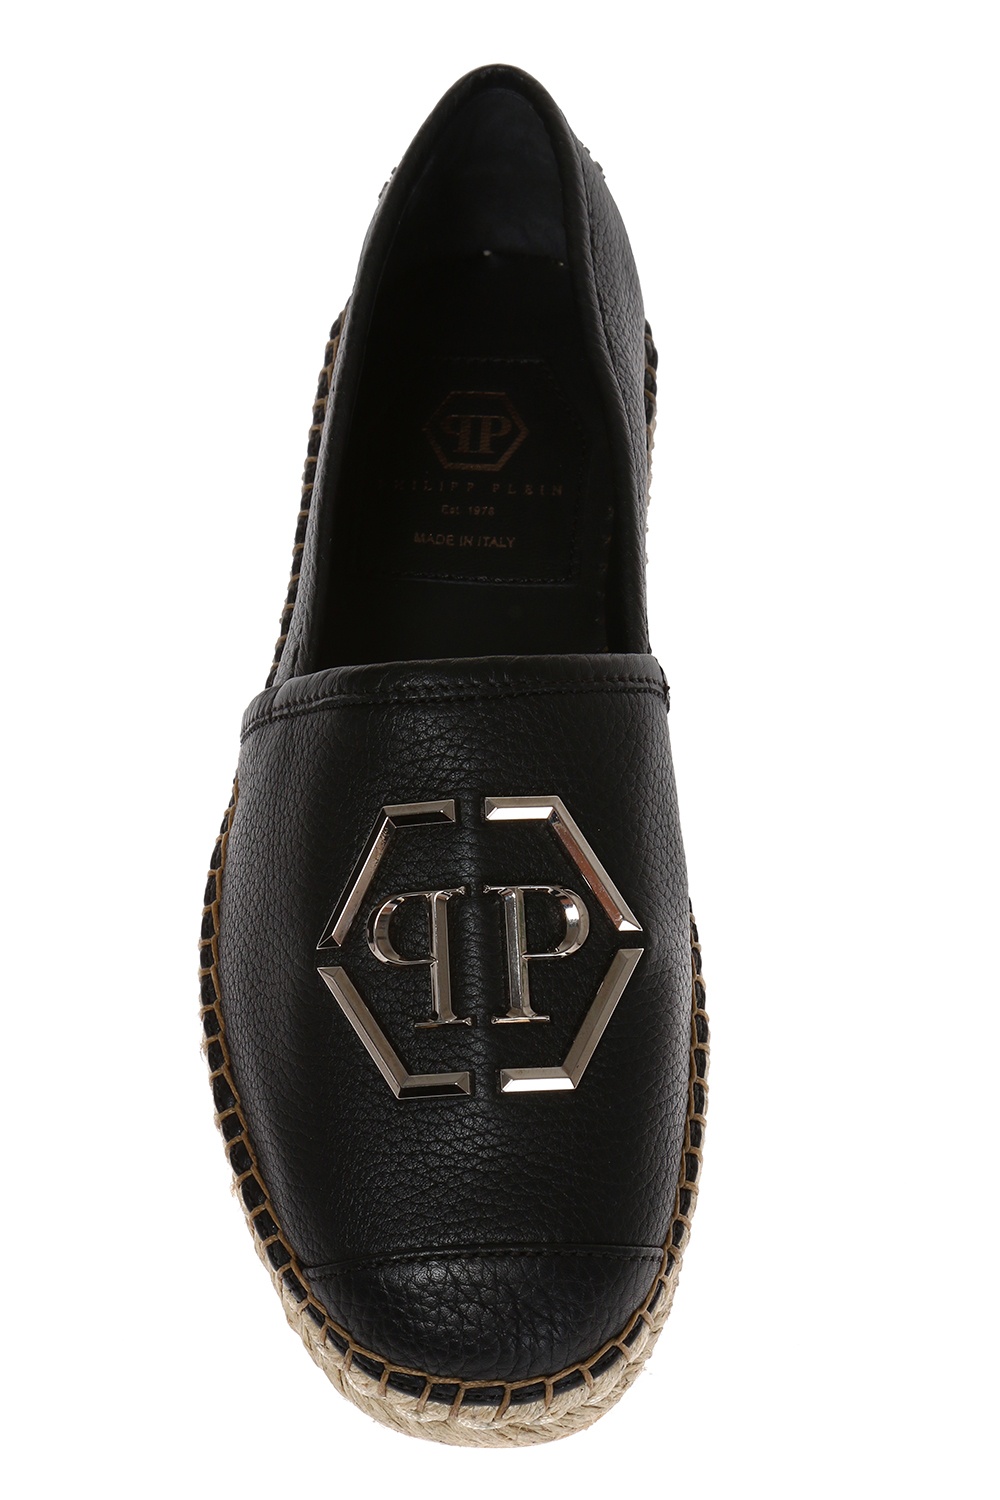 Philipp Plein Logo espadrilles, Men's Shoes